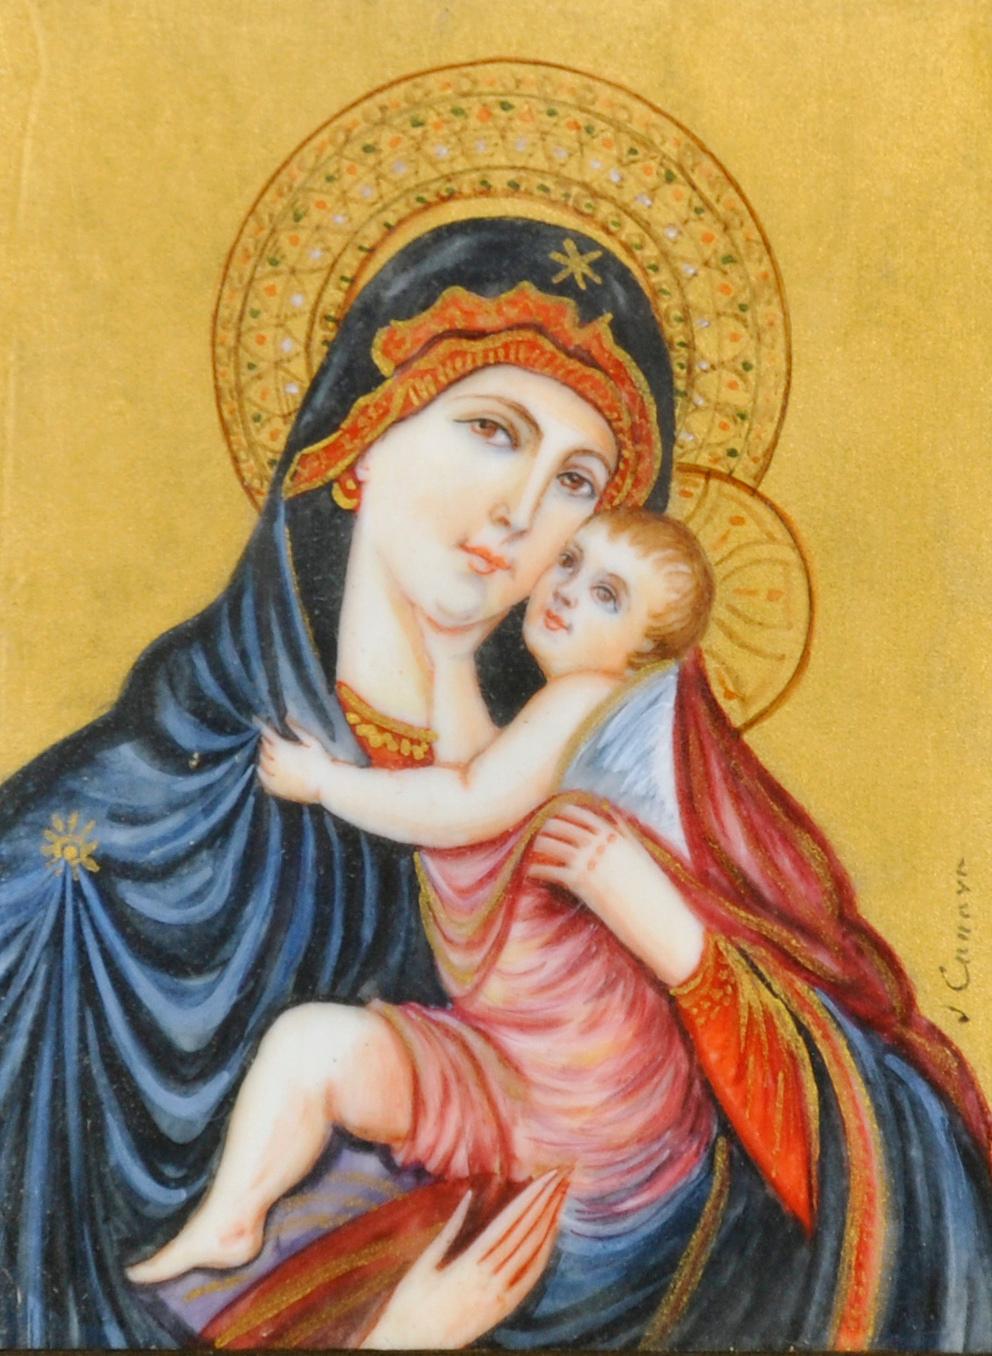 J. Canava Figurative Painting - 19th Century Italian Miniature Painting The Madonna & Child, Signed original